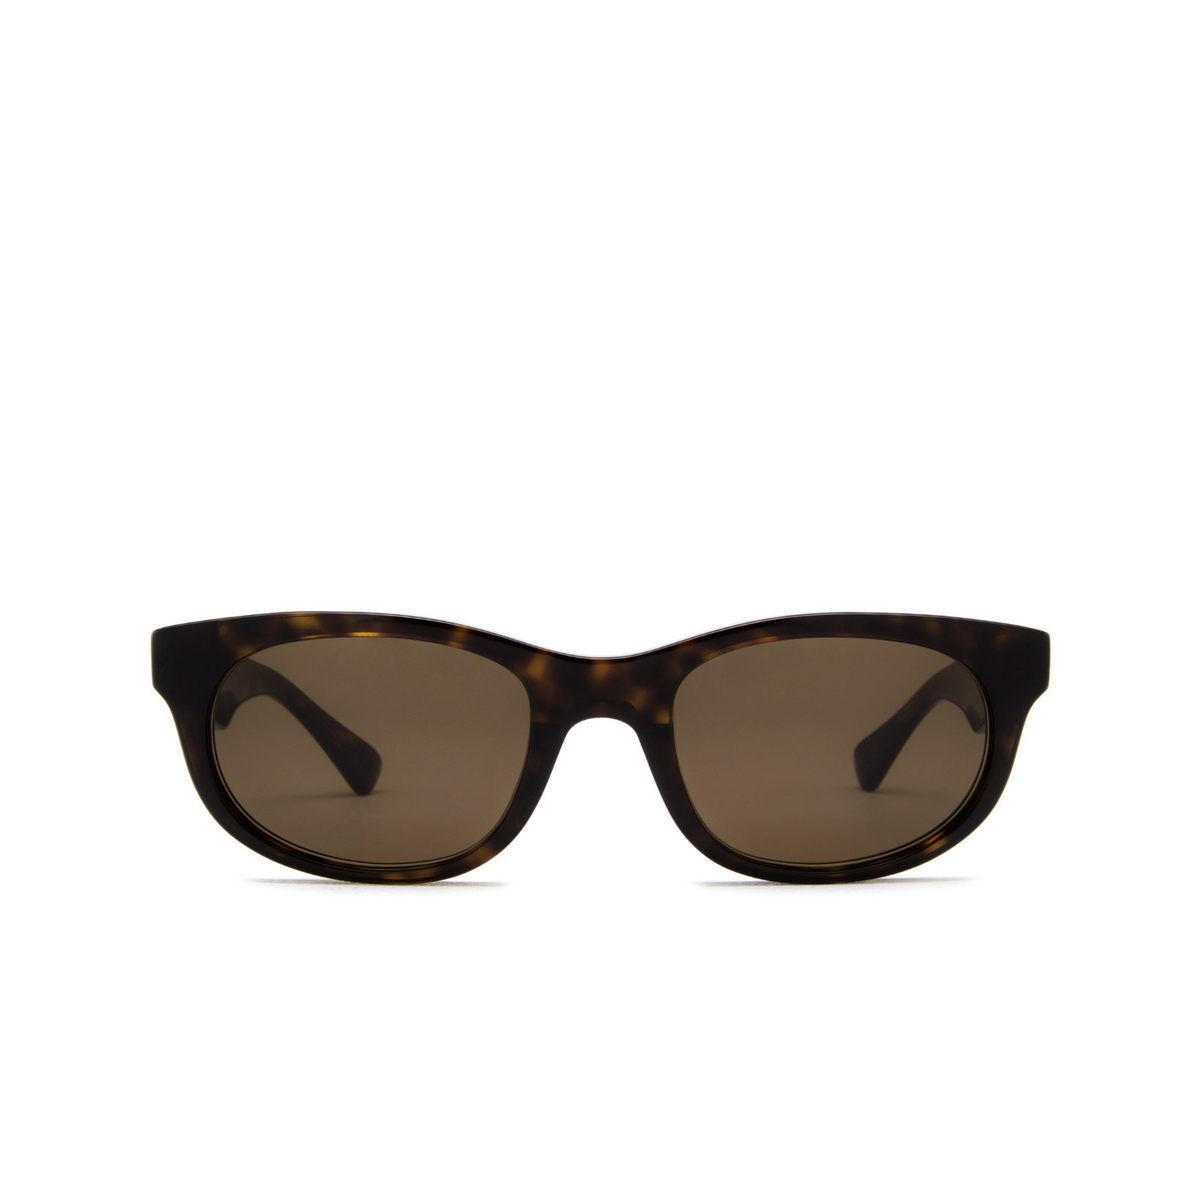 Bottega Veneta® Square Sunglasses: BV1145S color Havana 002 - front view.